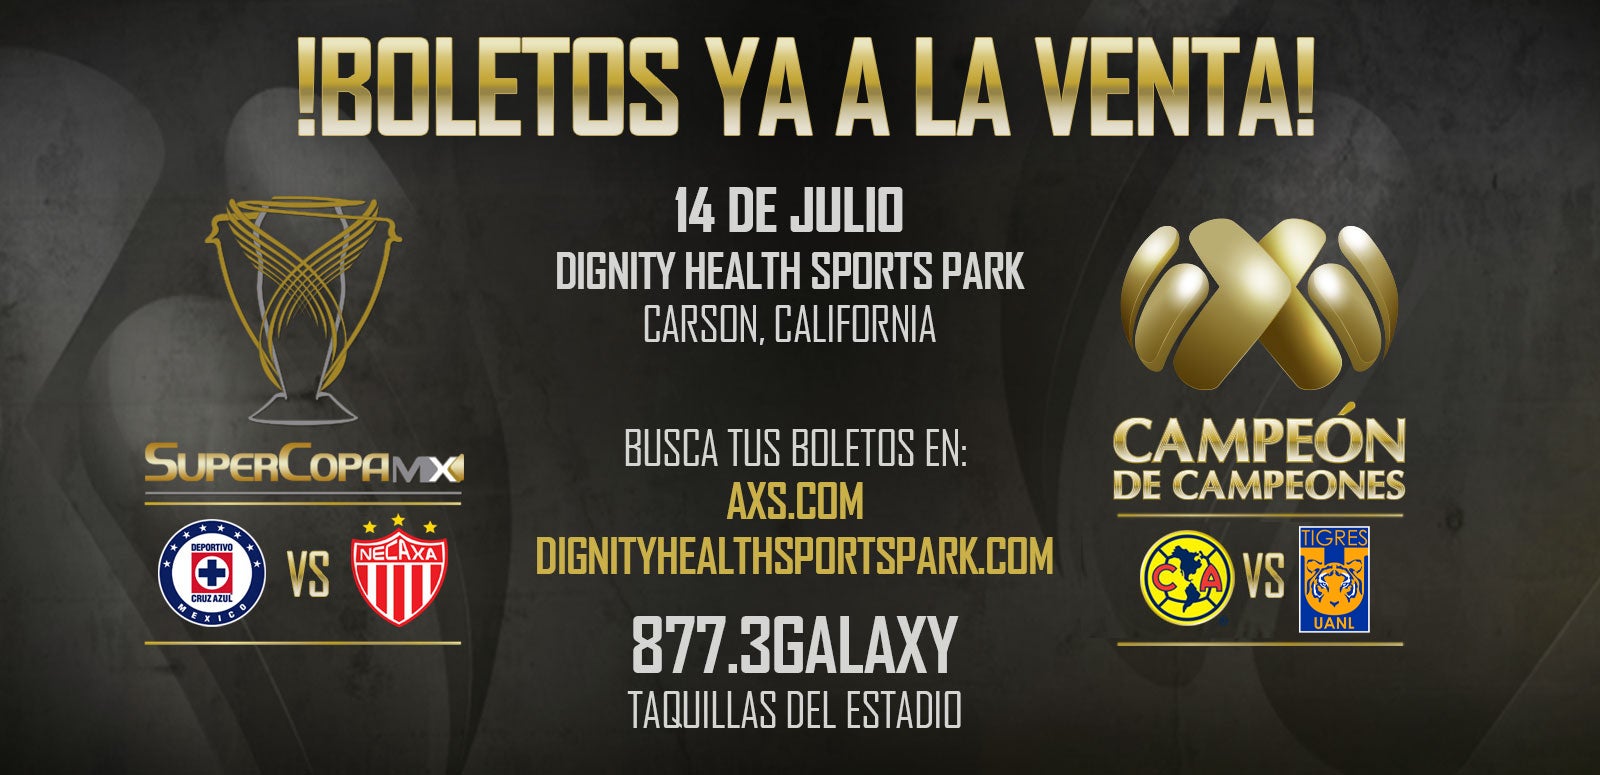 SuperCopa MX + Campeon de Campeones | Dignity Health Sports Park